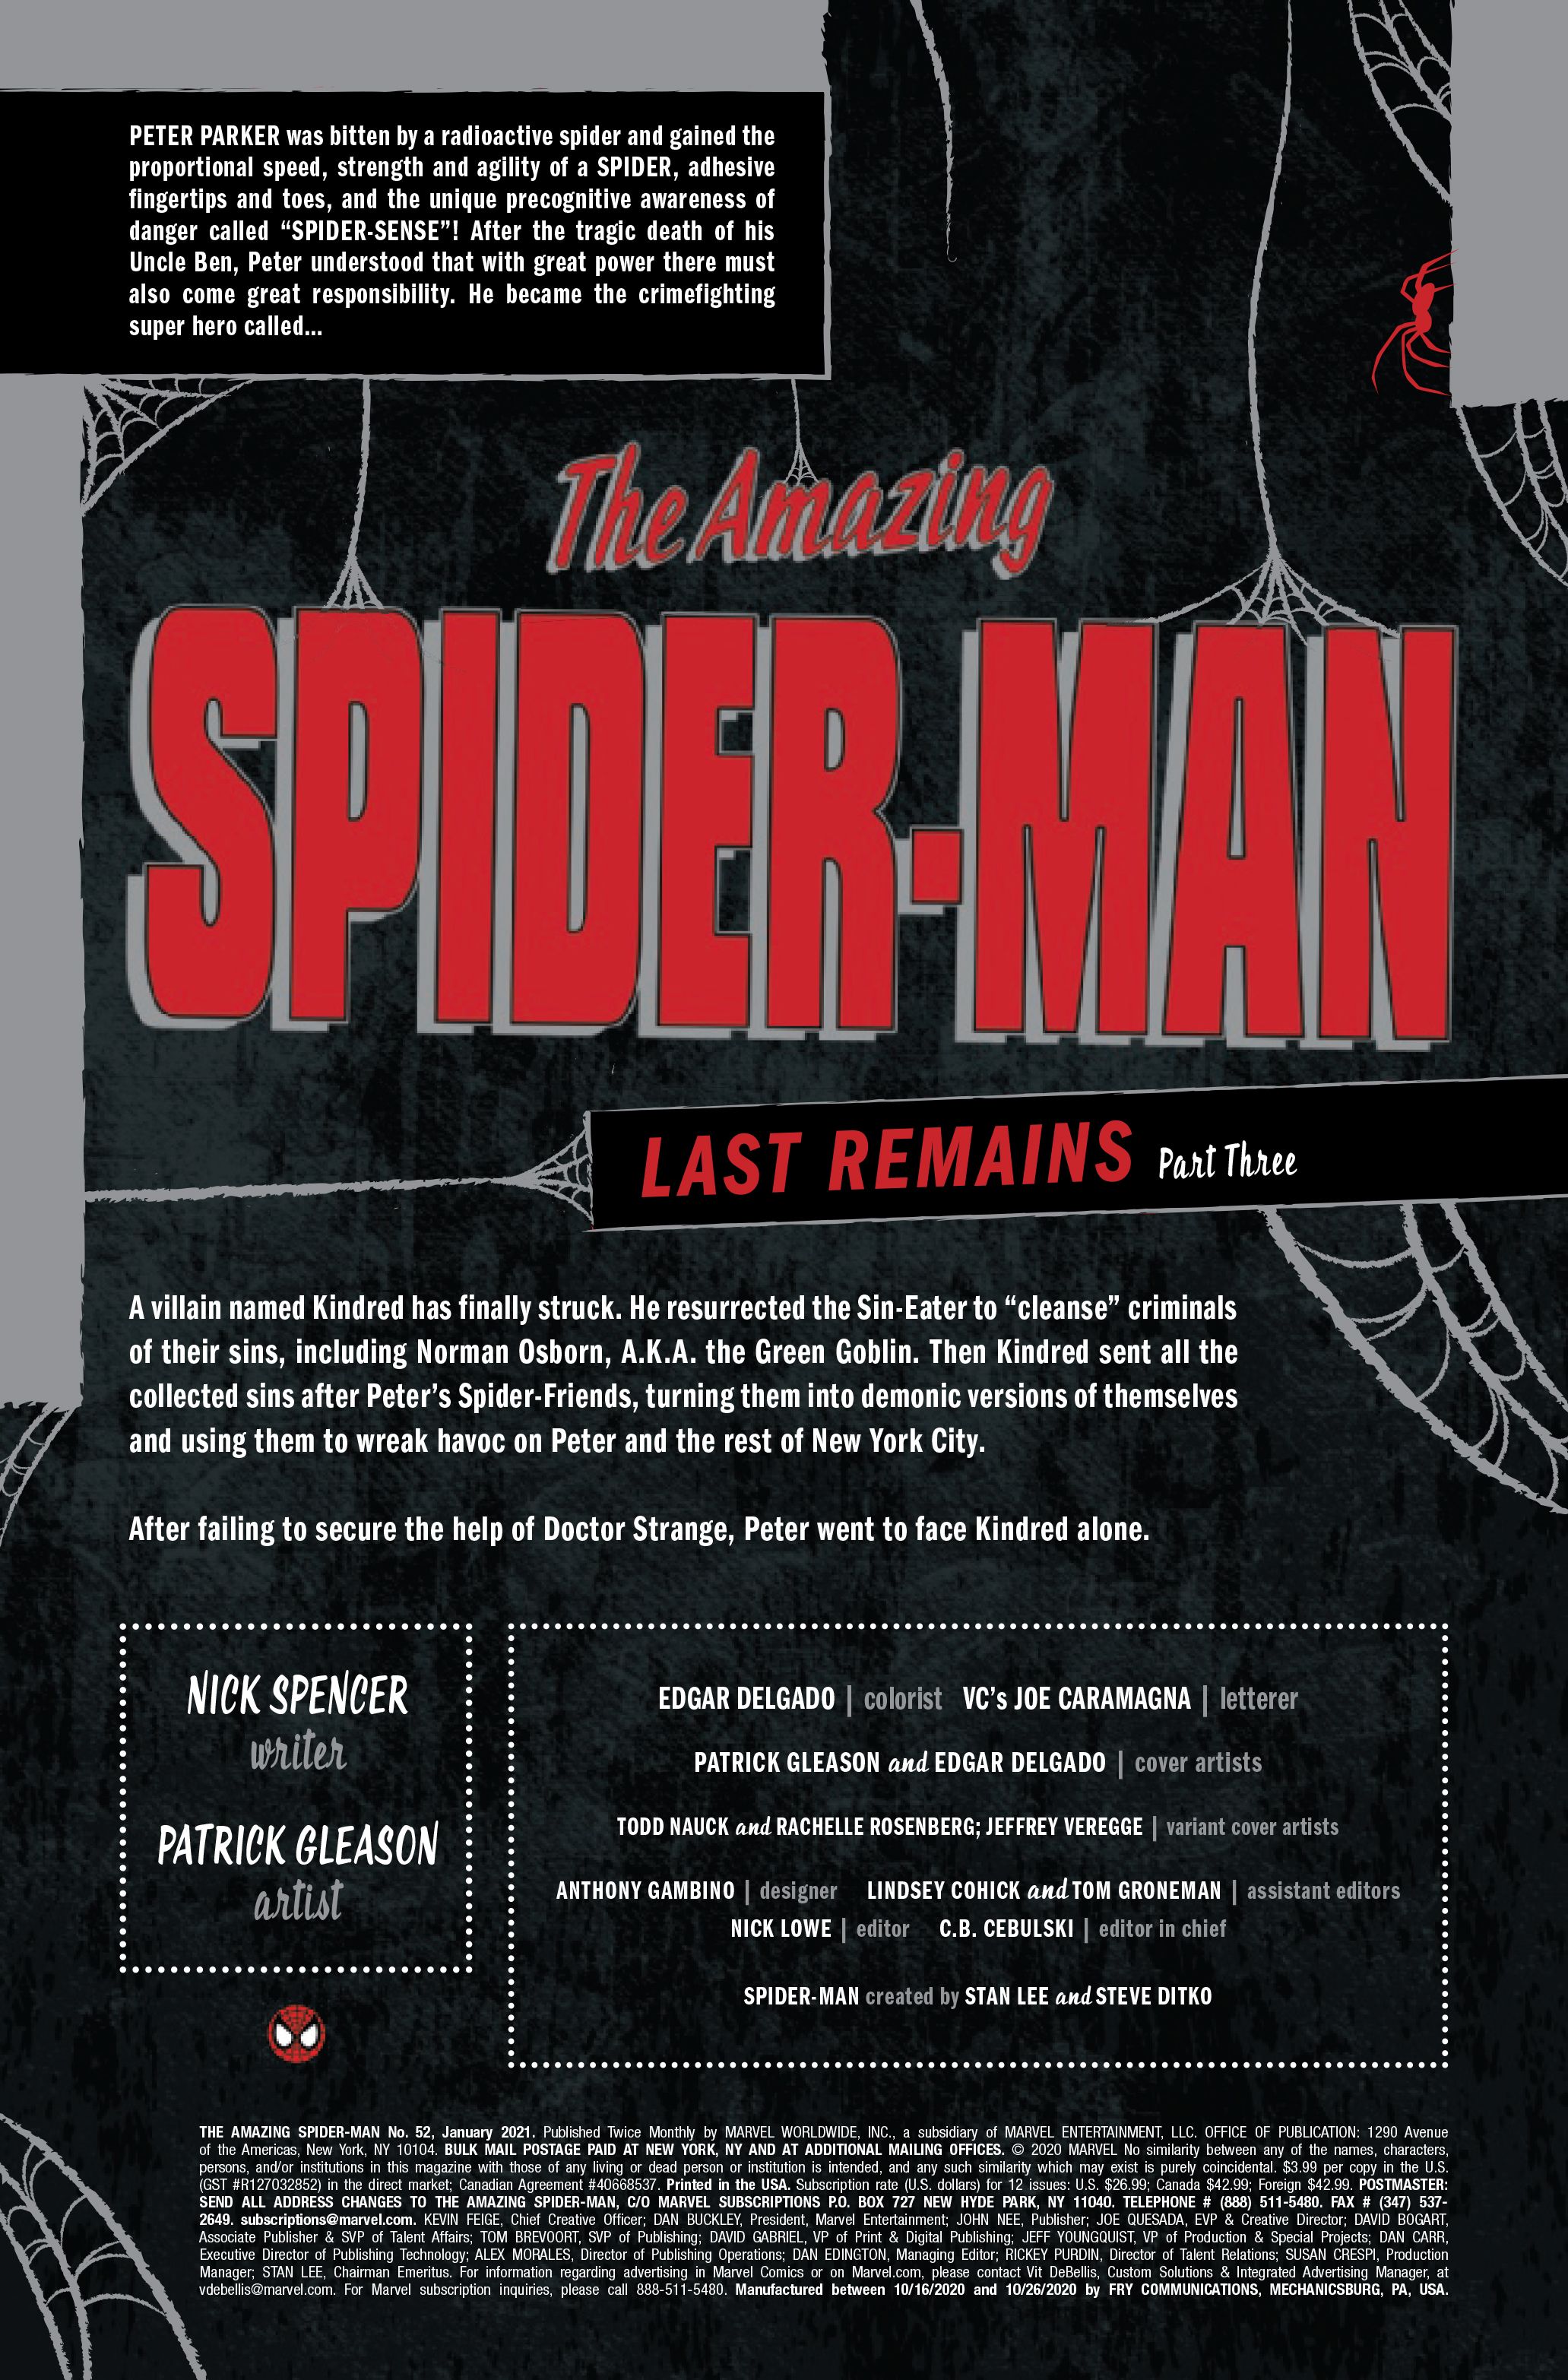 The Amazing Spider-Man #52, by Nick Spencer, Patrick Gleason, Edgar Delgado and VC's Joe Caramagna, page 1